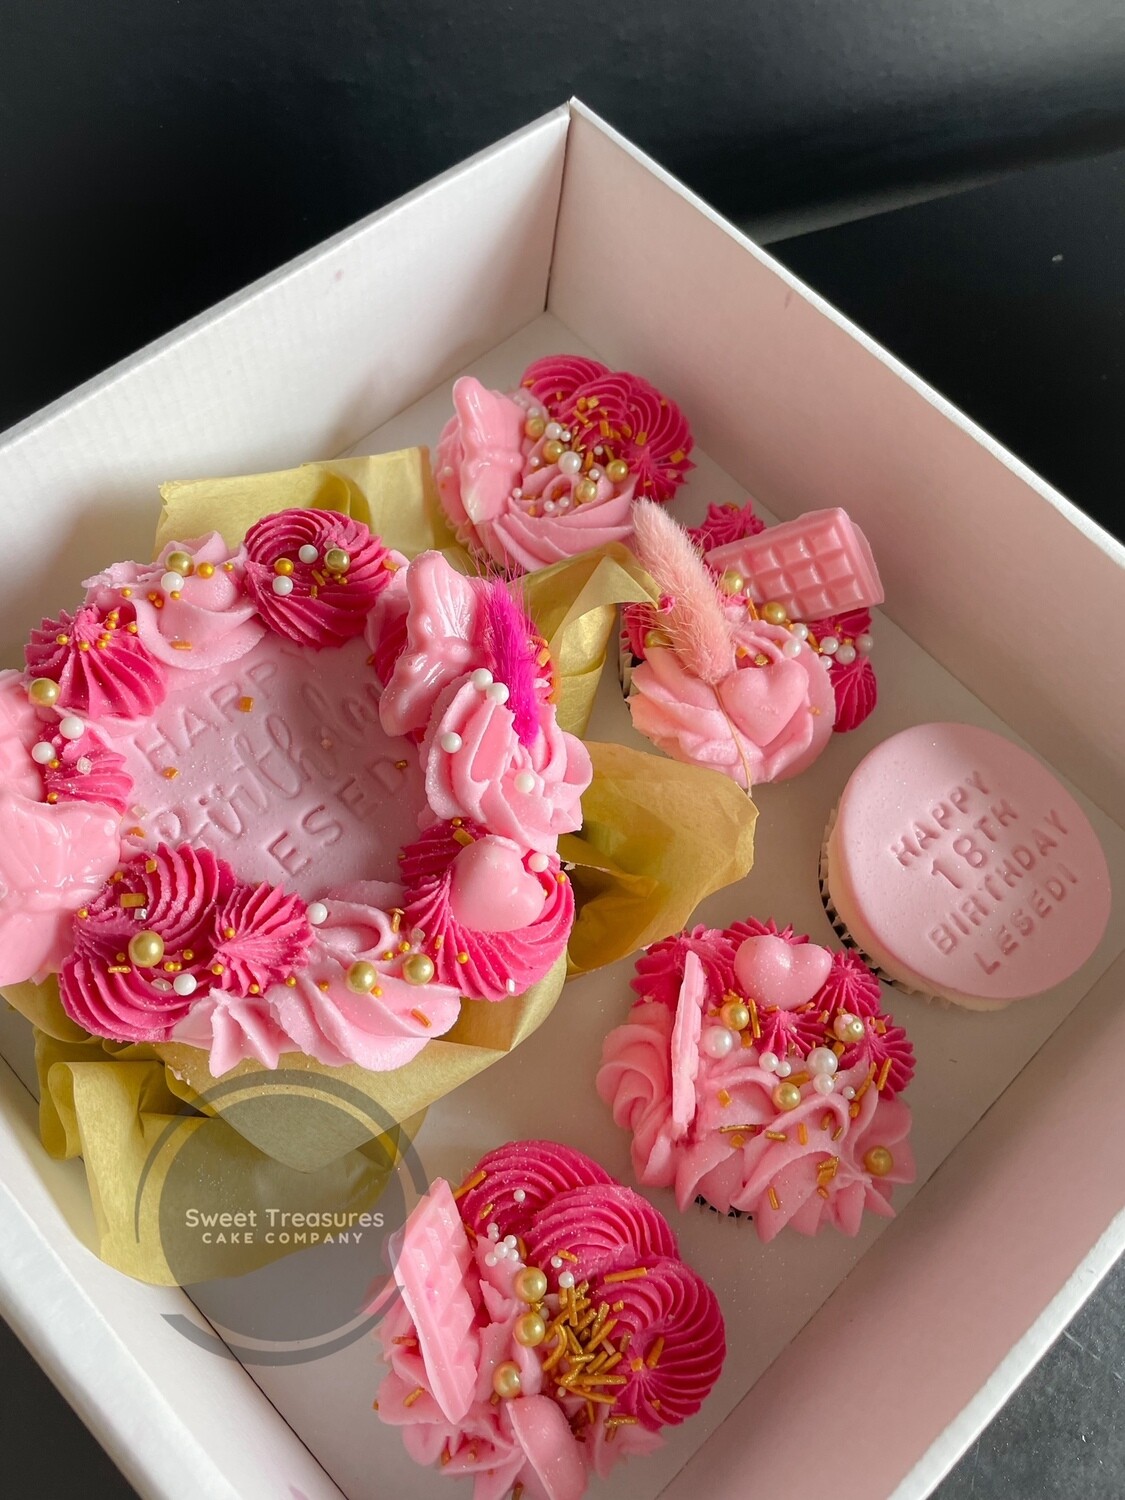 Bento Celebration Cake Box, Bento Style: Bento Cake with 5 Cupcakes